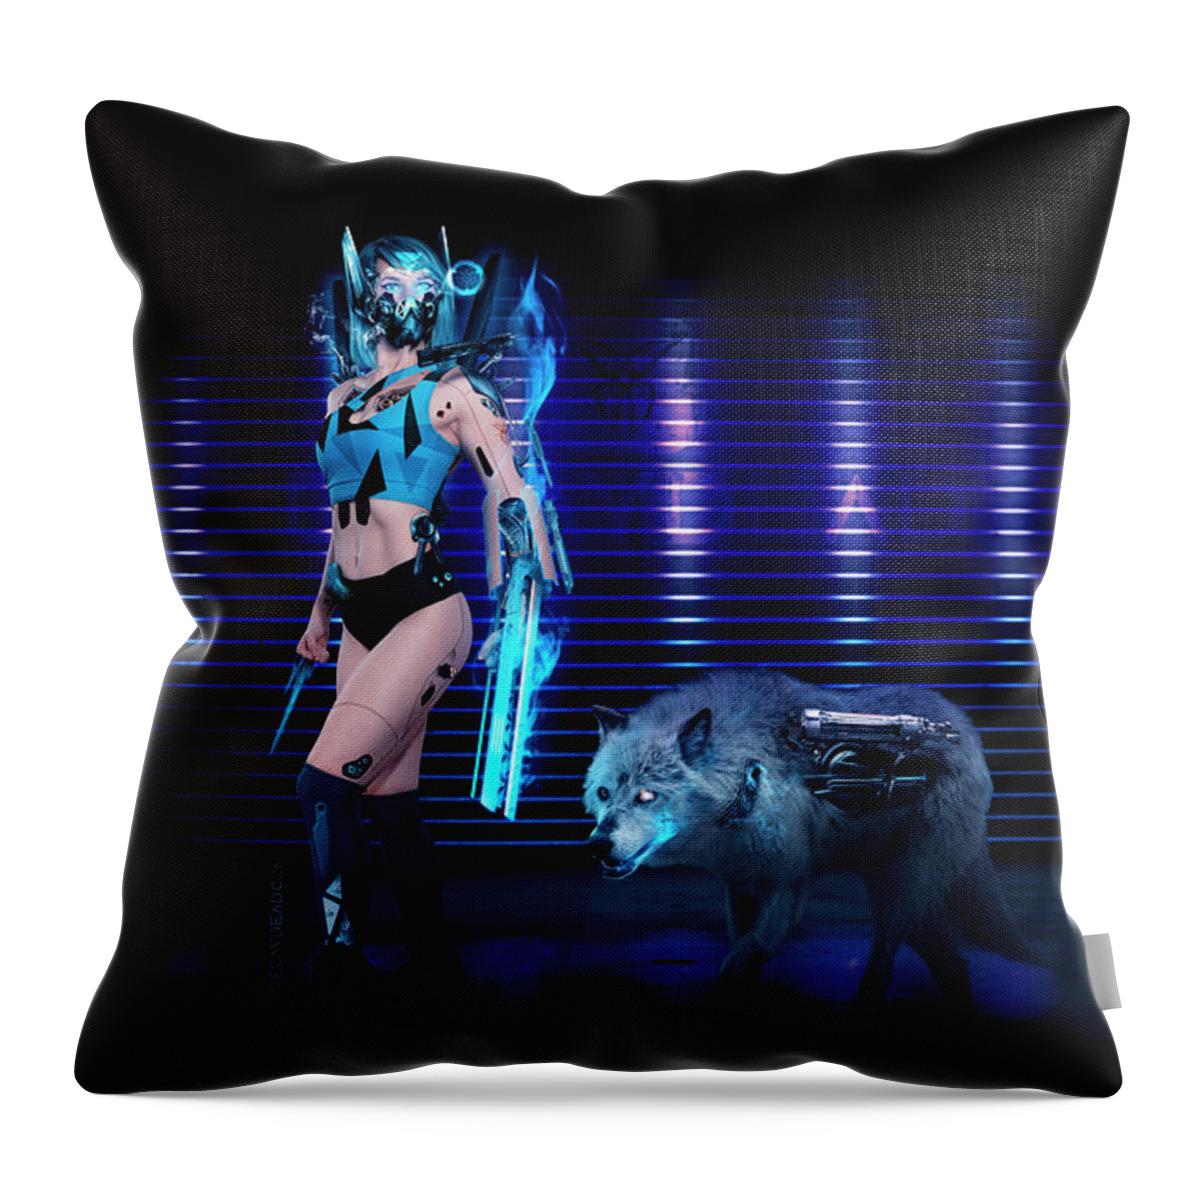 Argus Dorian Throw Pillow featuring the digital art Wolf Assassin Death by the Blue Flame by Argus Dorian